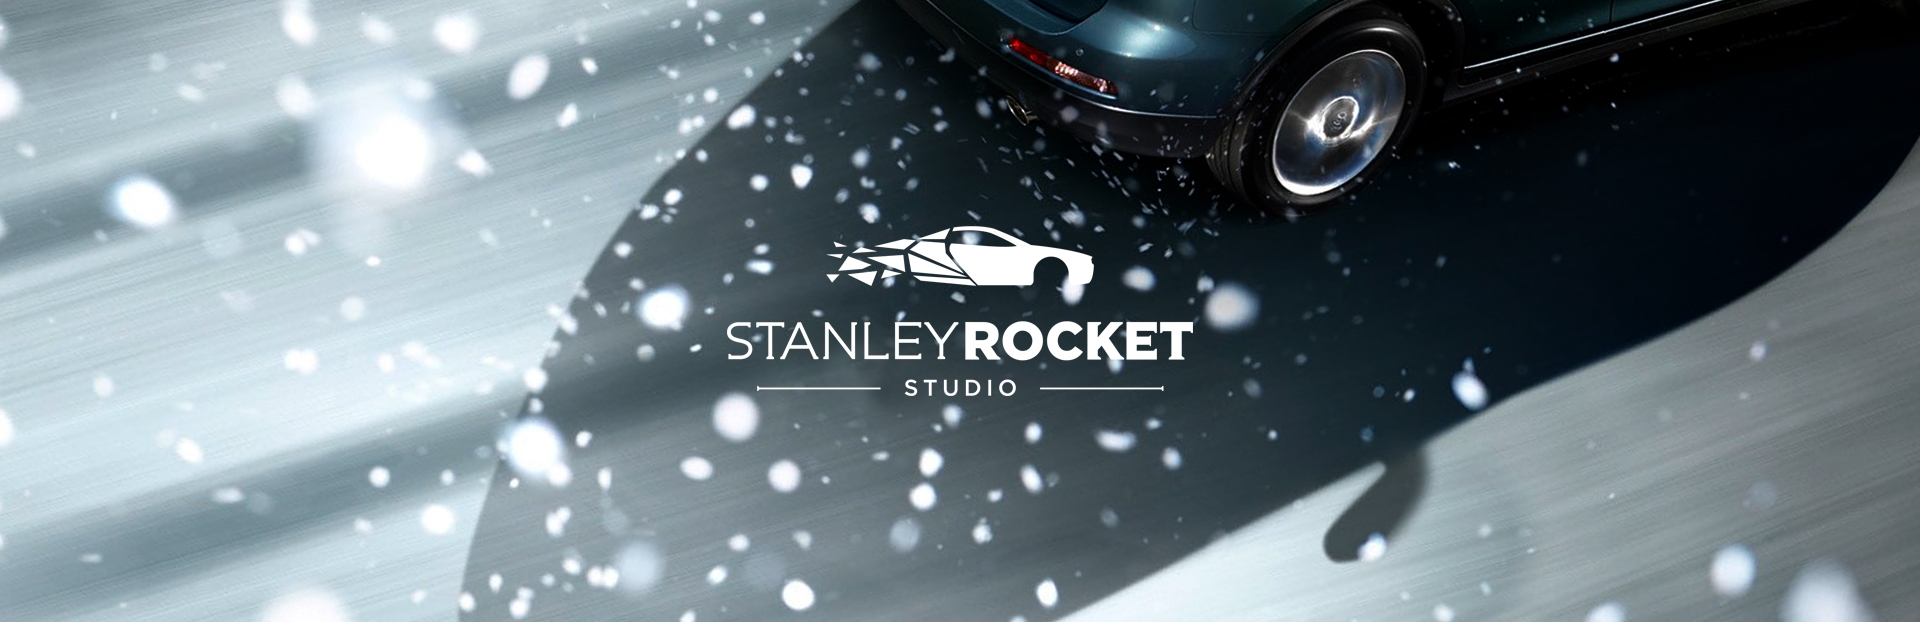 Stanley Rocket